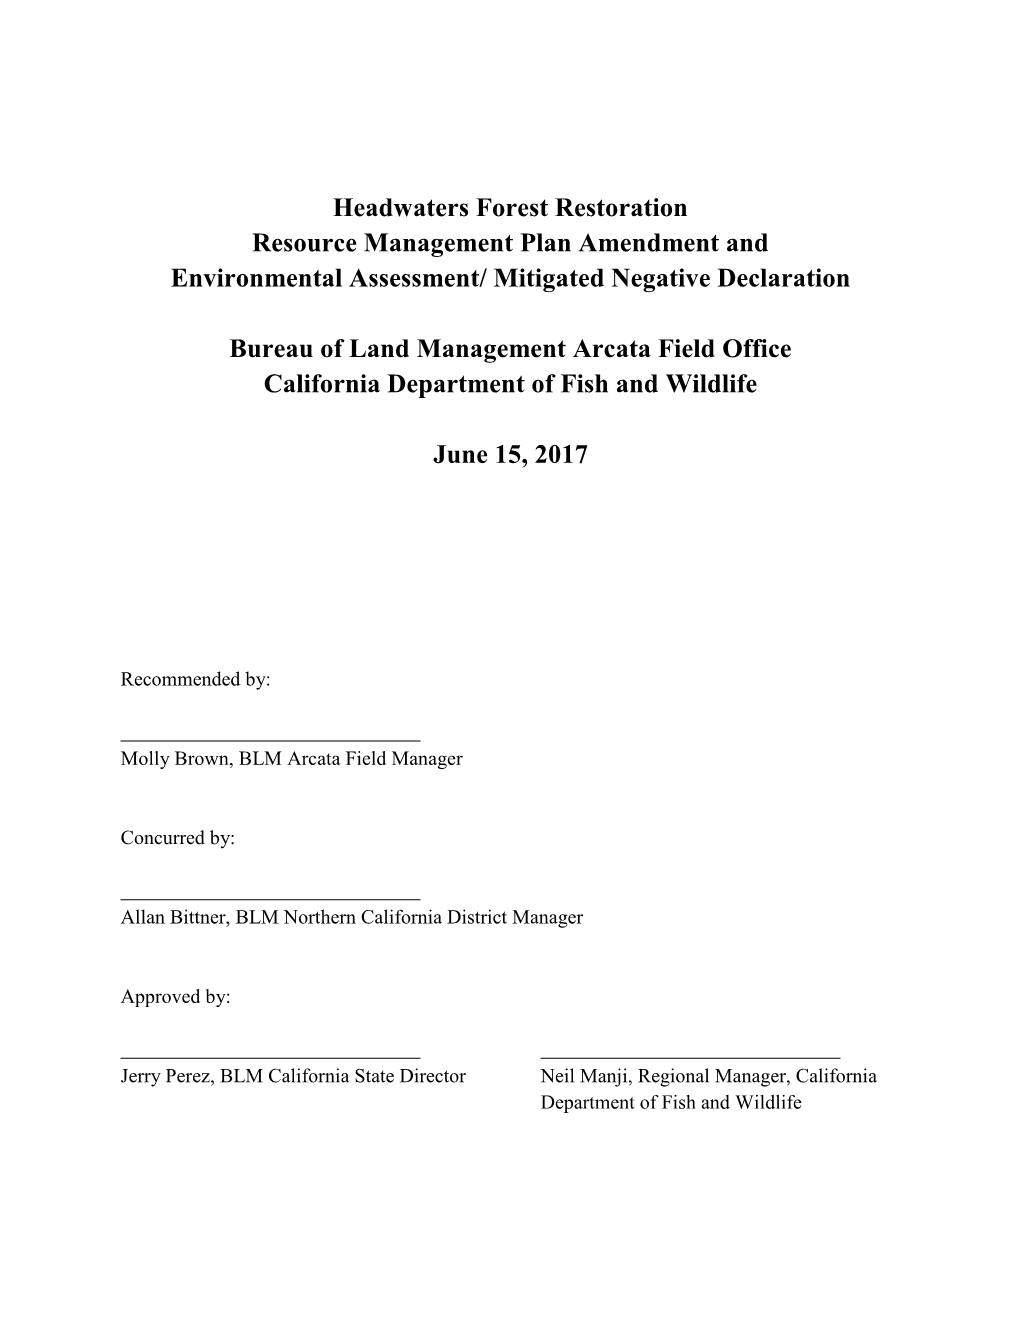 Headwaters Forest Restoration Resource Management Plan Amendment and Environmental Assessment/ Mitigated Negative Declaration